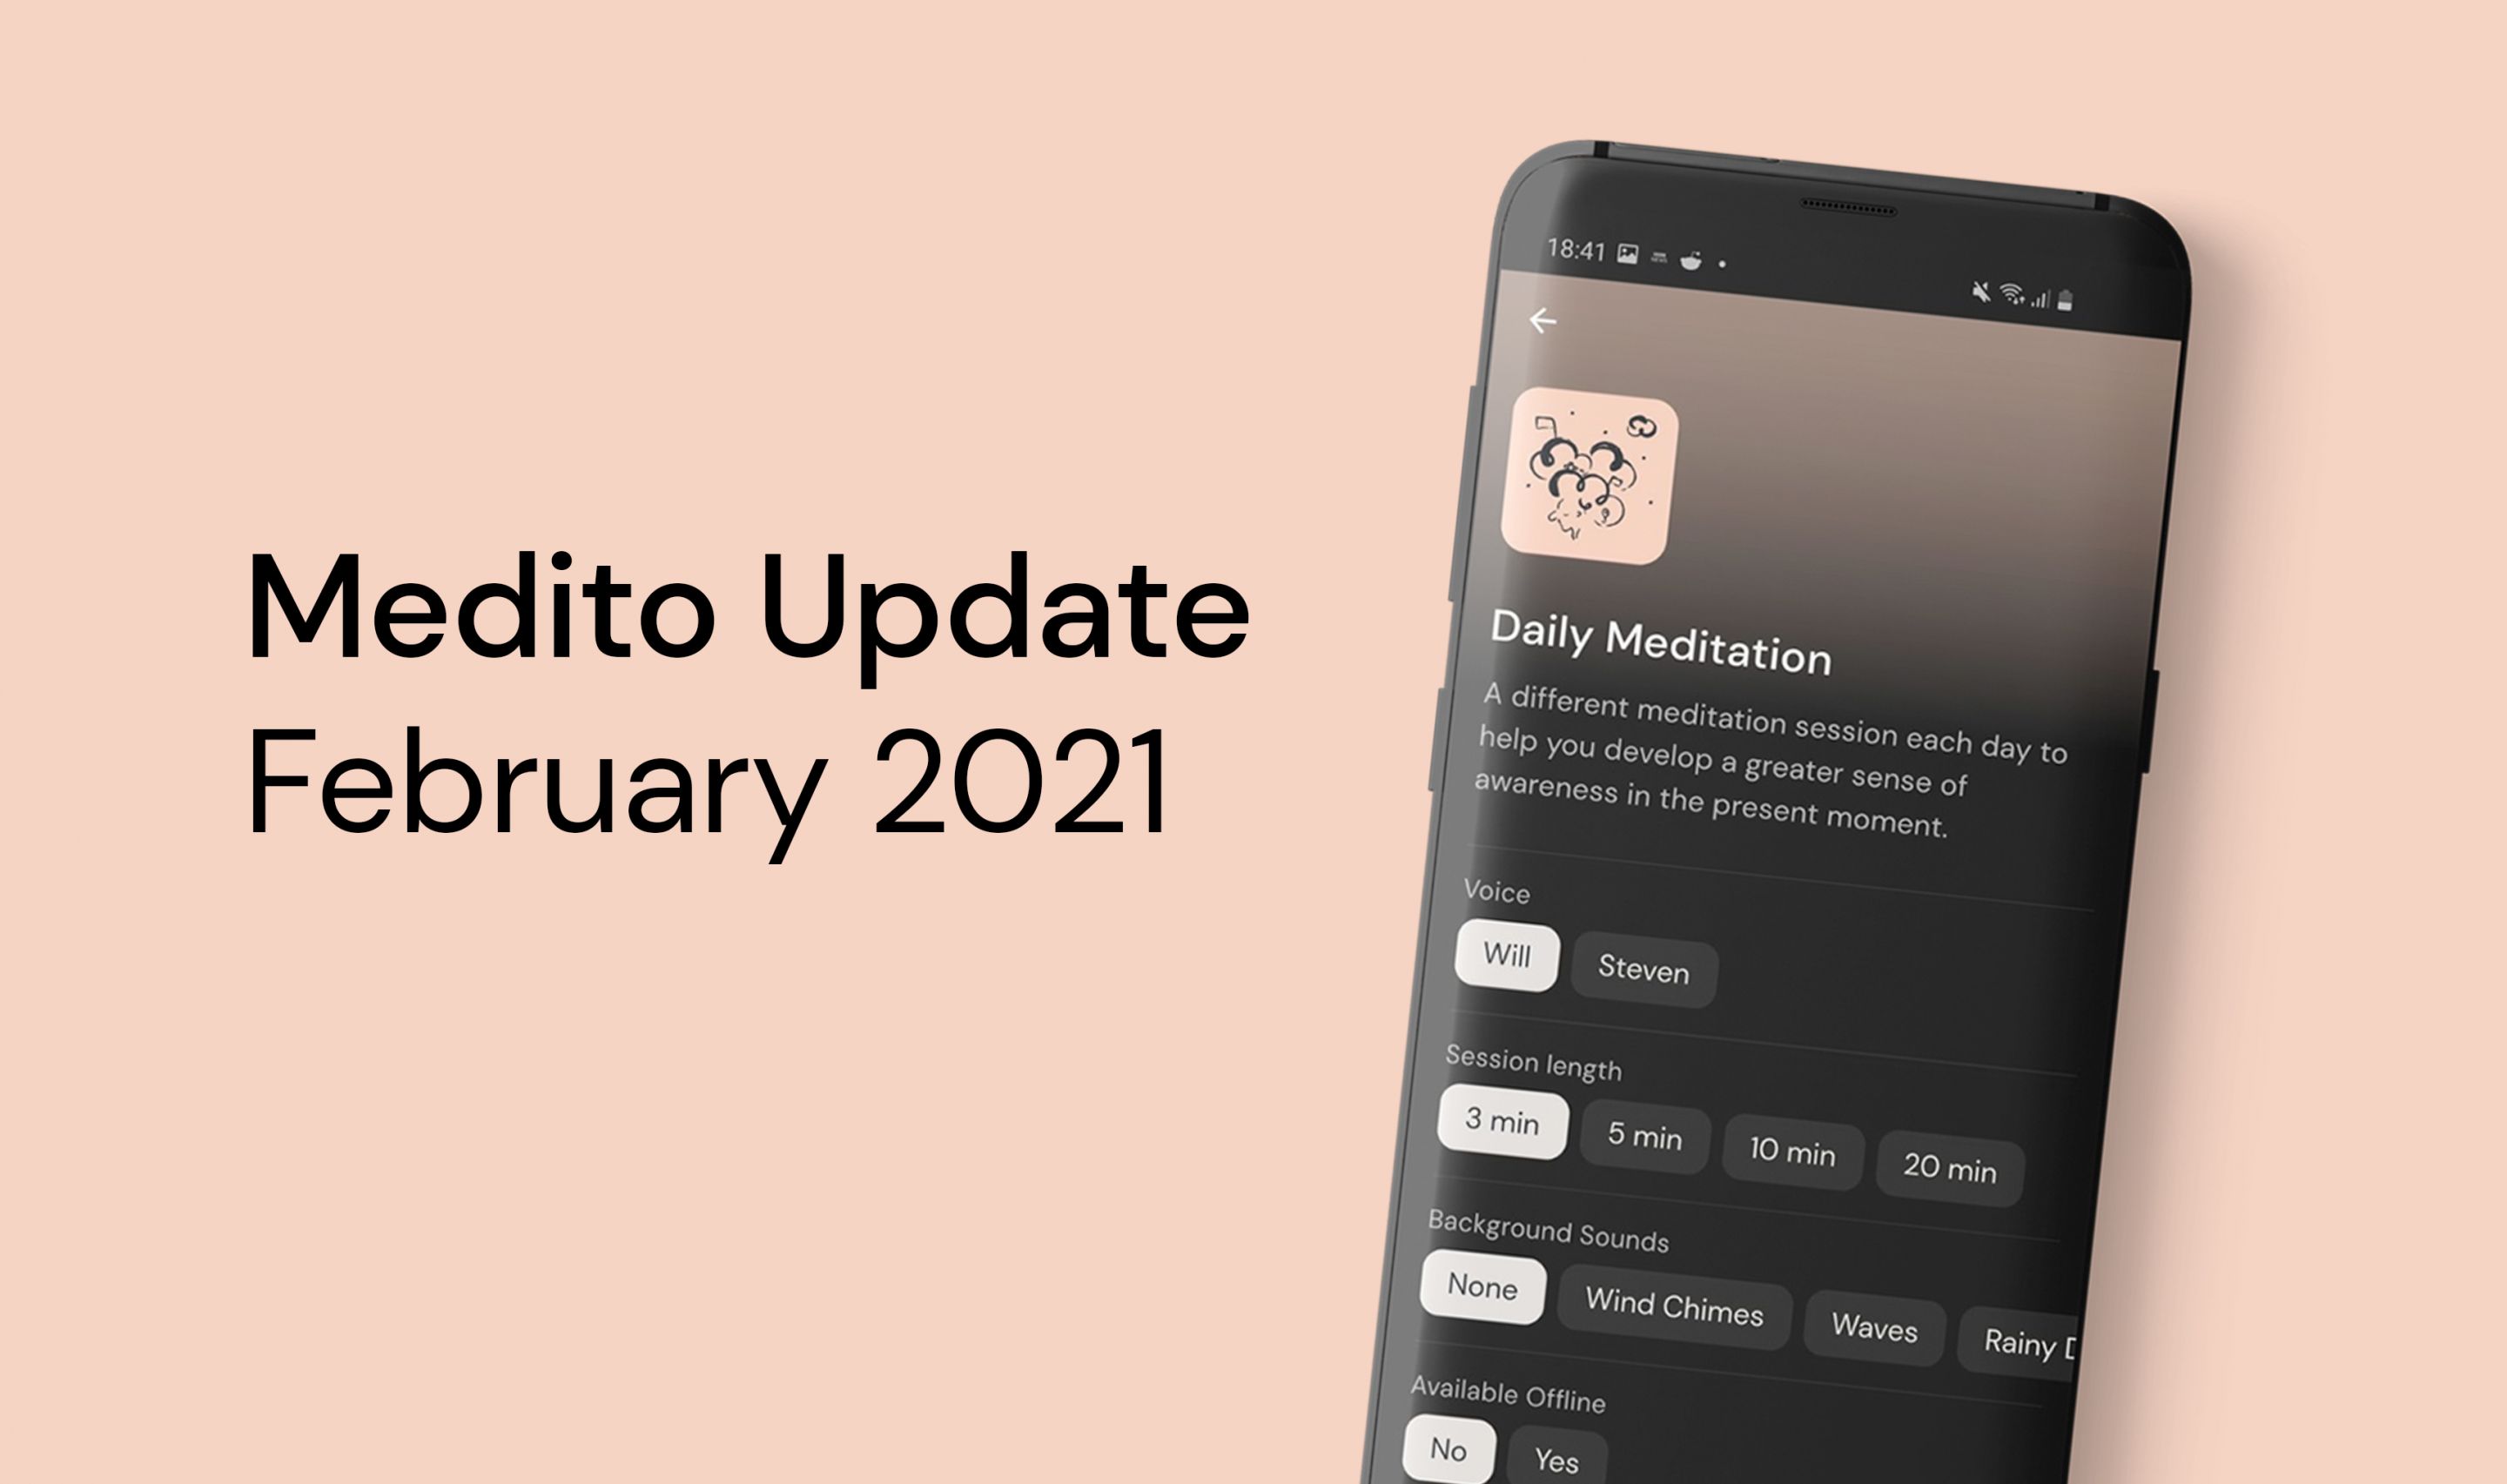 Medito Update - February 2021